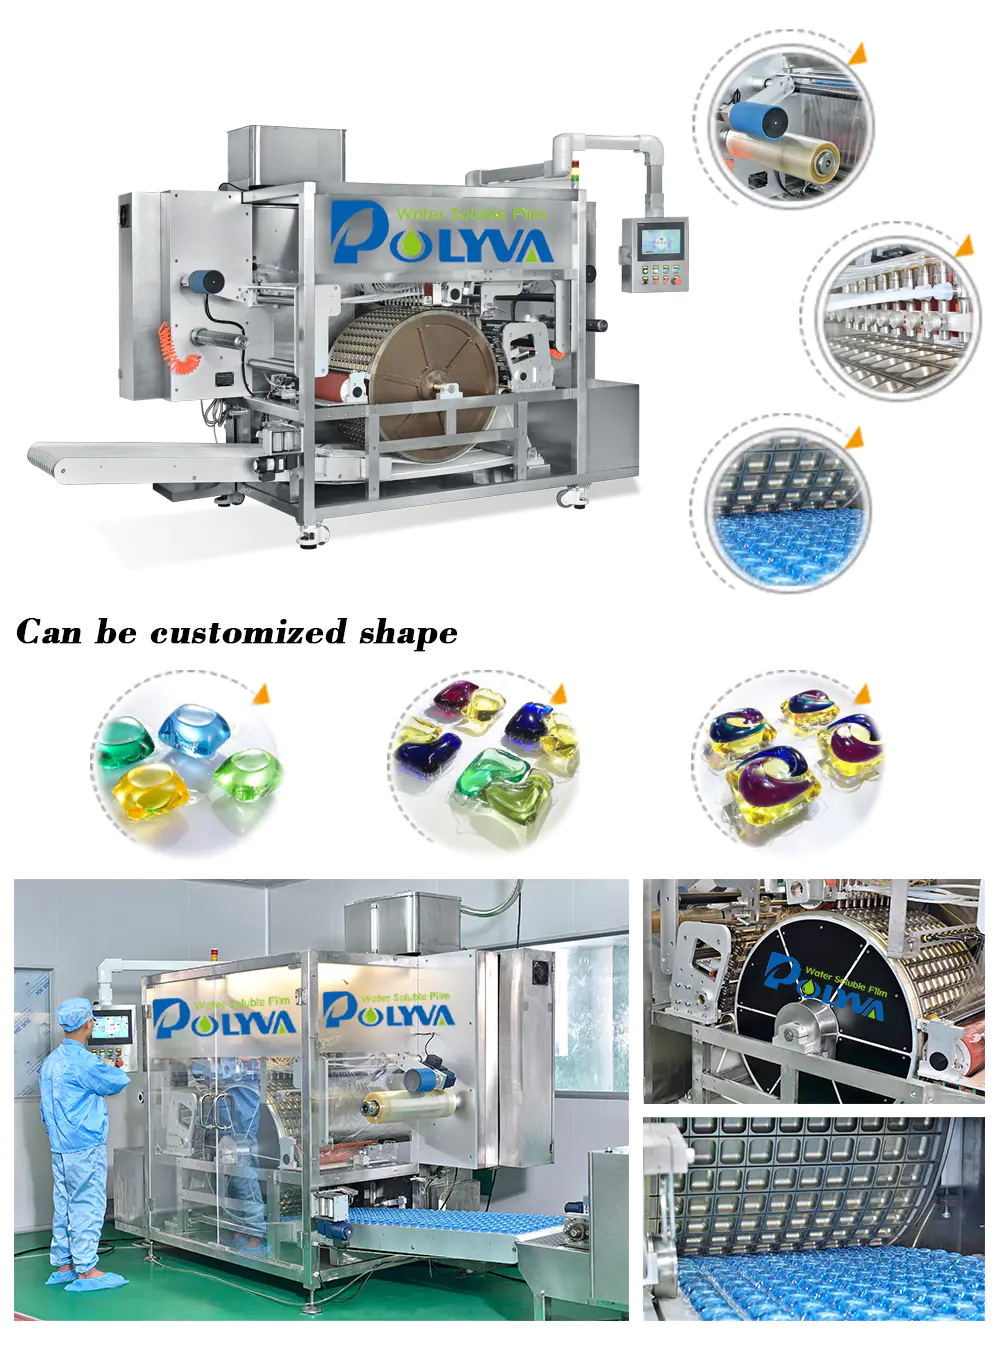 liquid Custom machine water soluble film packaging nzc POLYVA